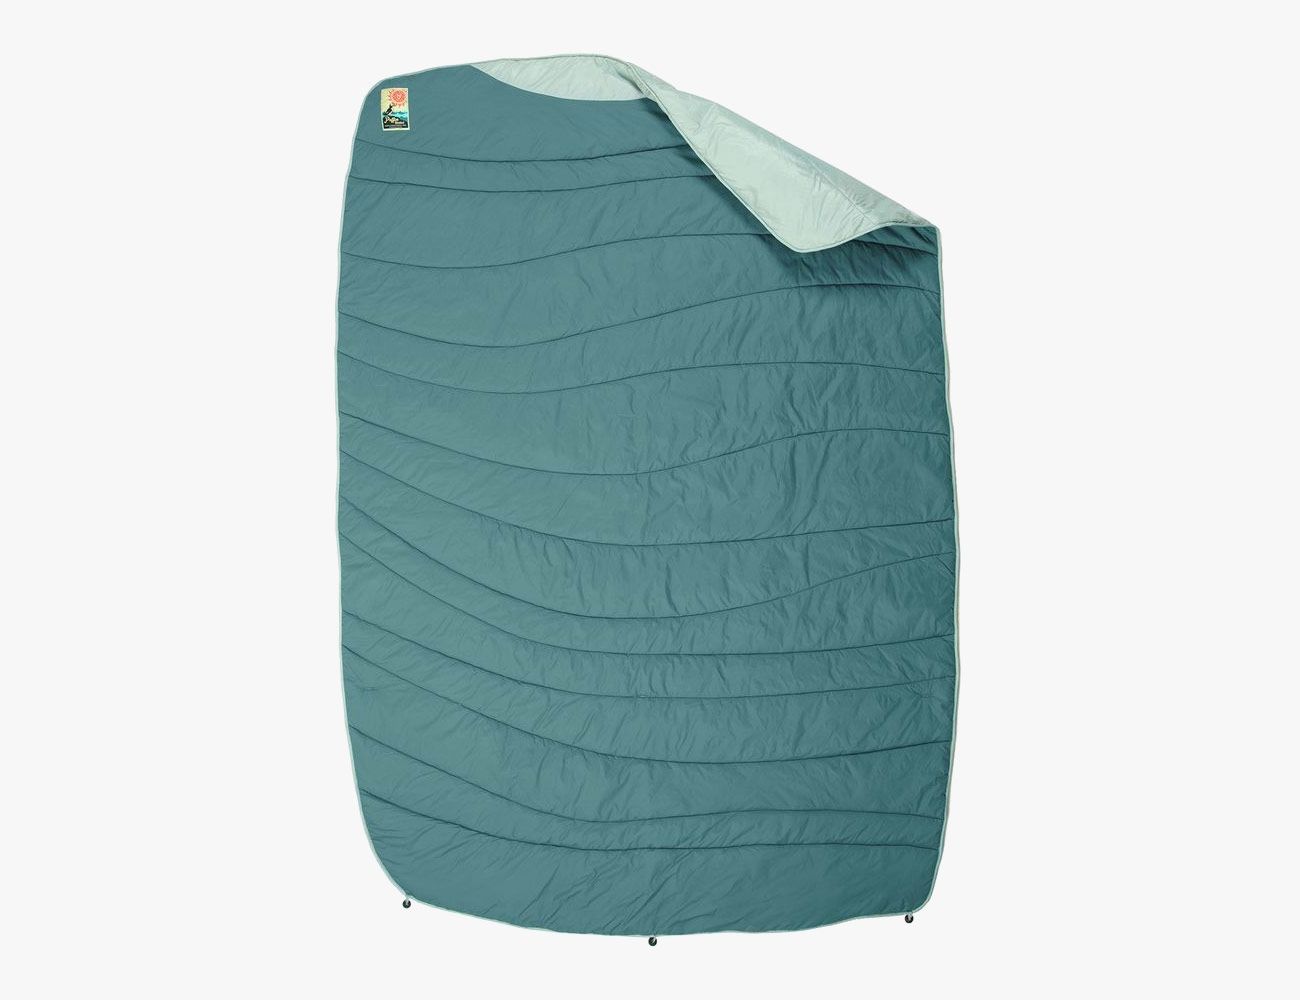 best camping blanket